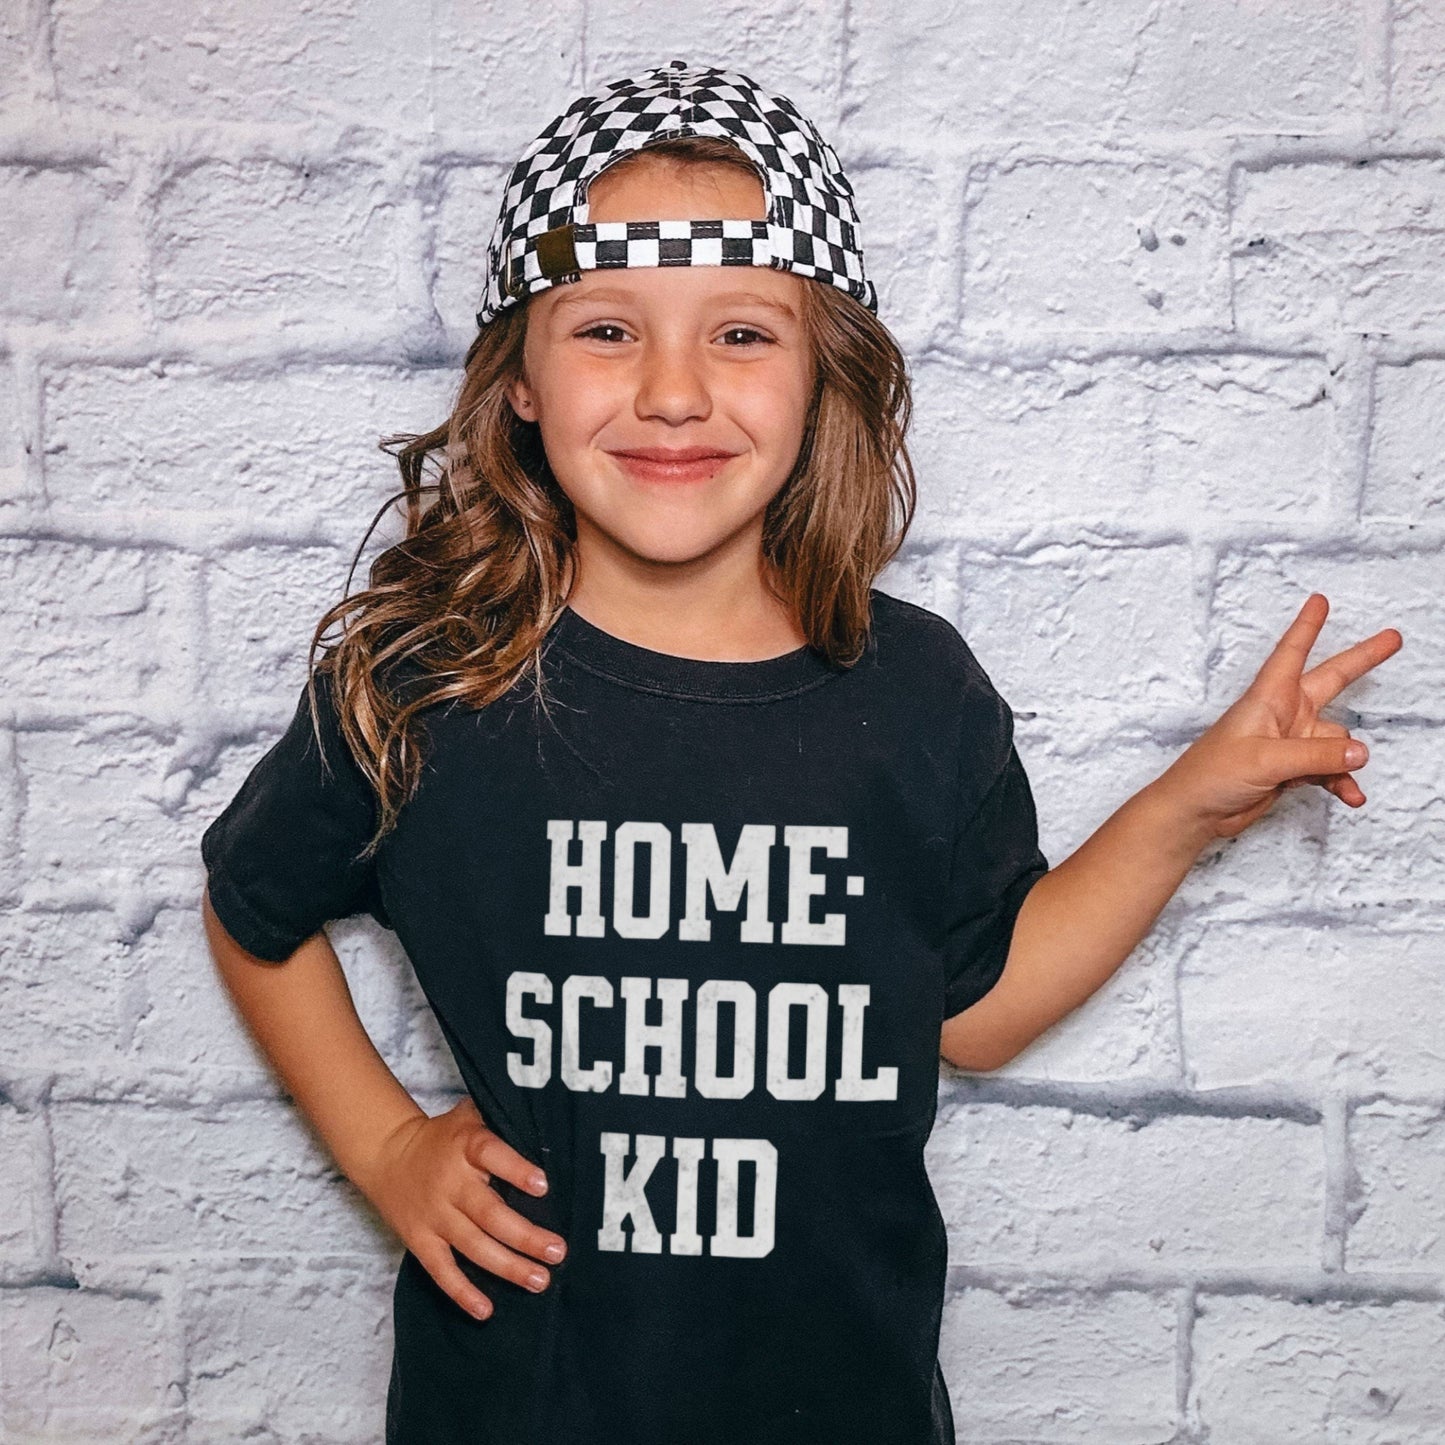 homeschool kid shirt for kids in black for homeschoolers